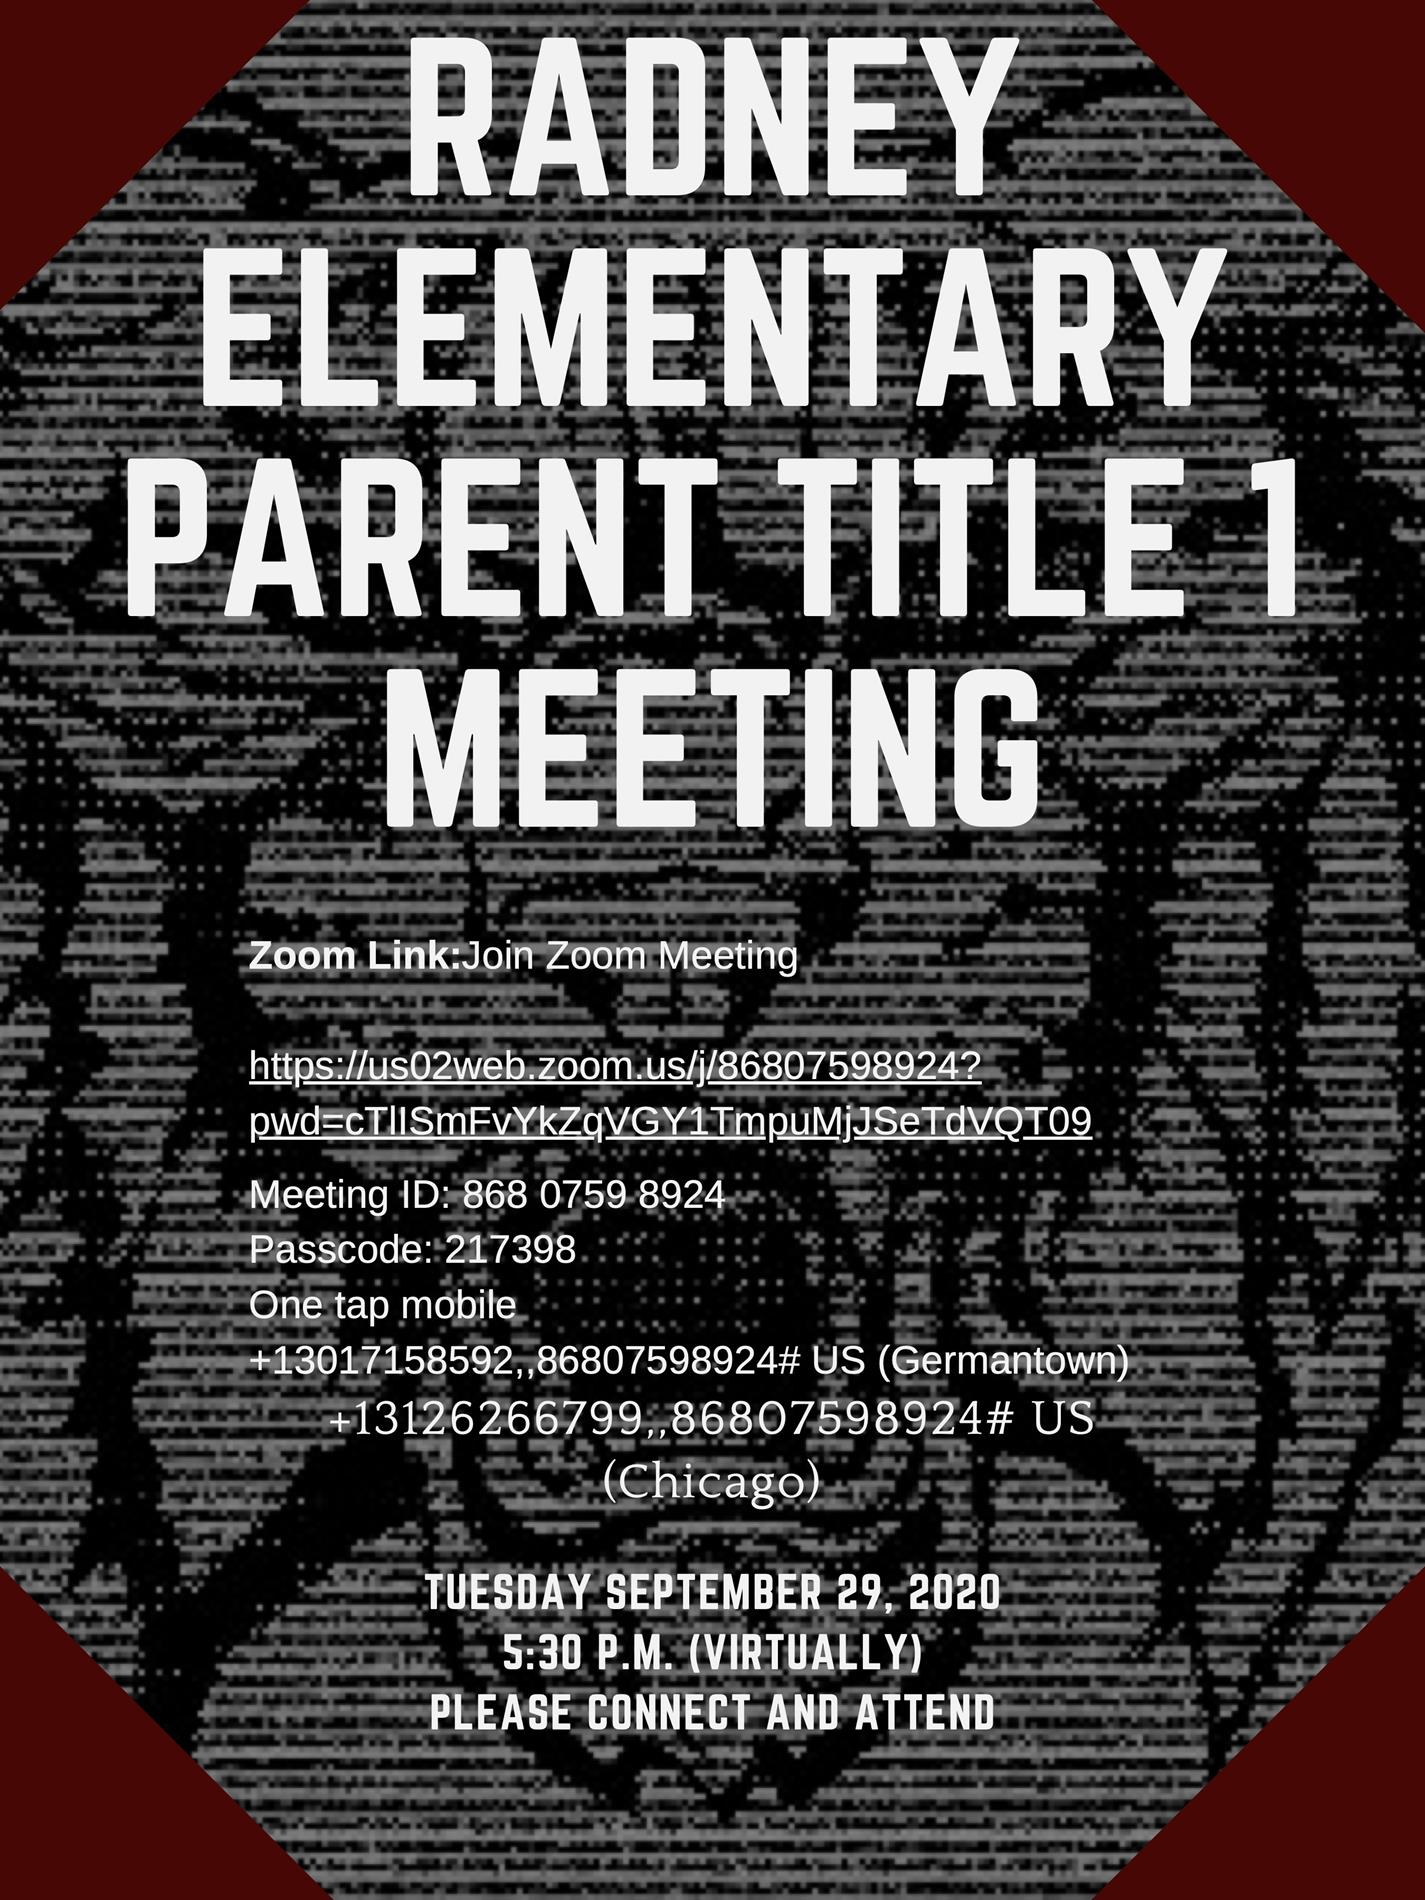 Title 1 Parent Meeting